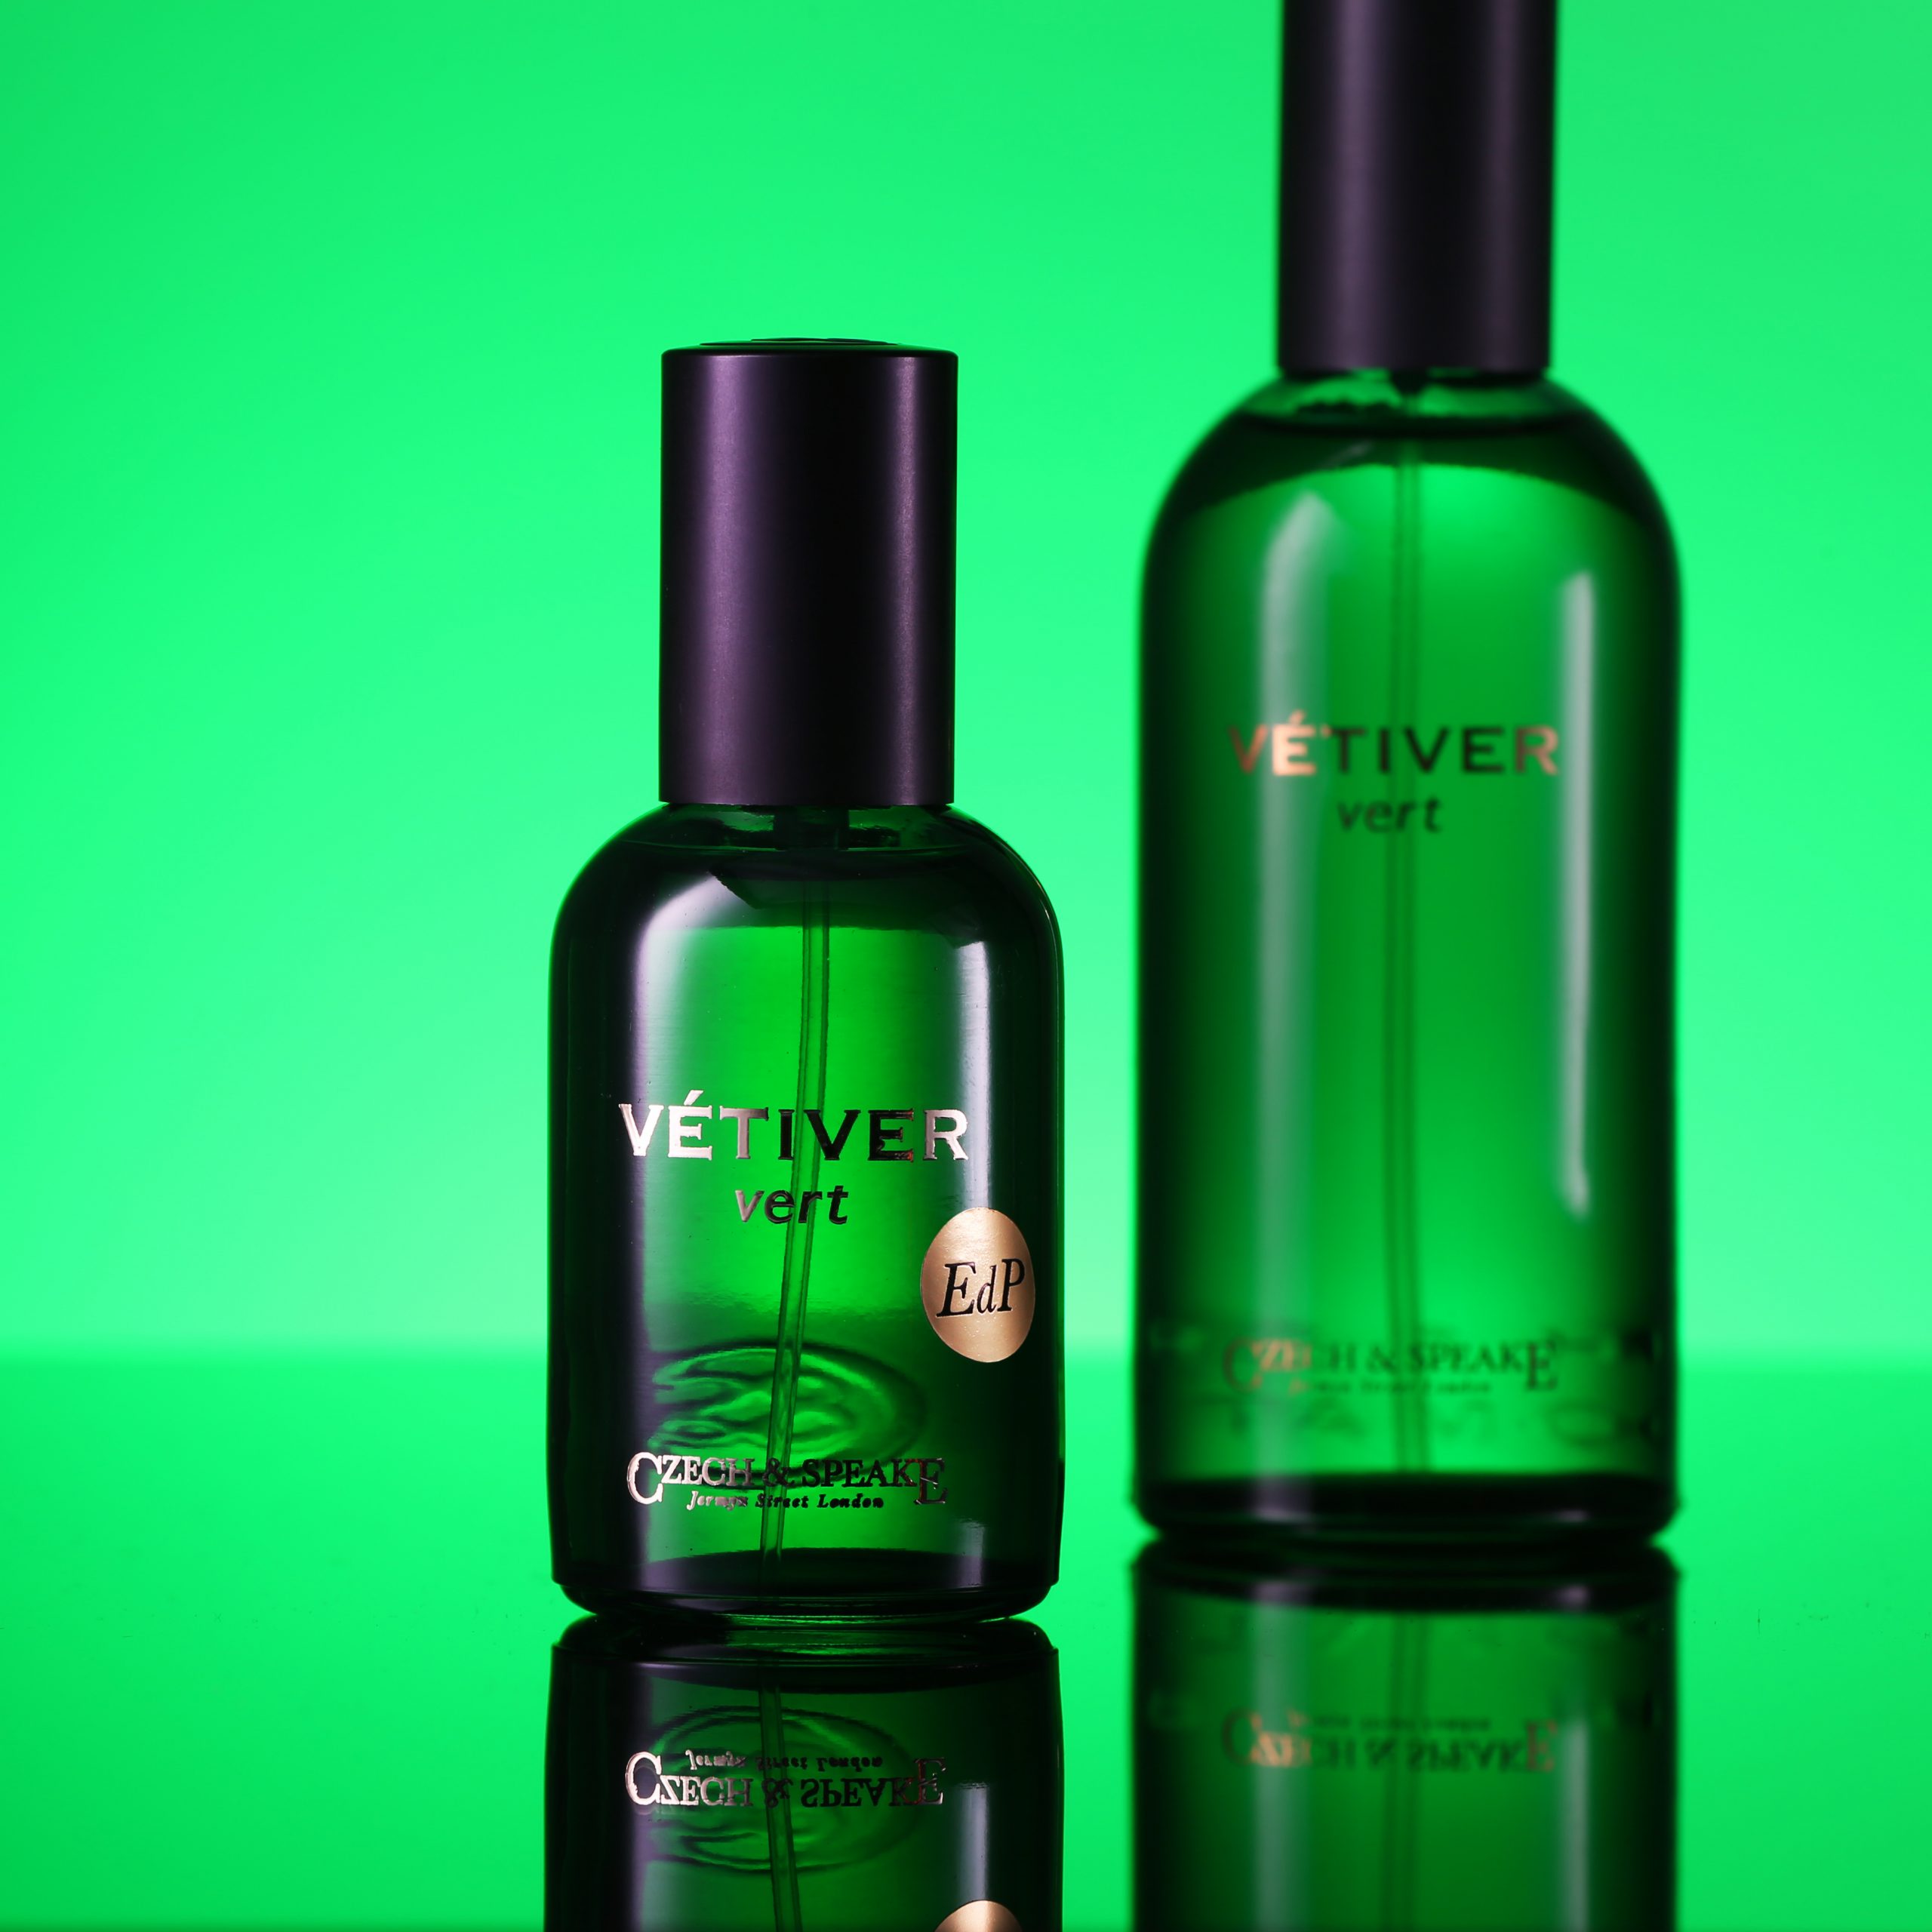 Vetiver Vert Eau de Parfum 50ml and Cologne 100ml on green background